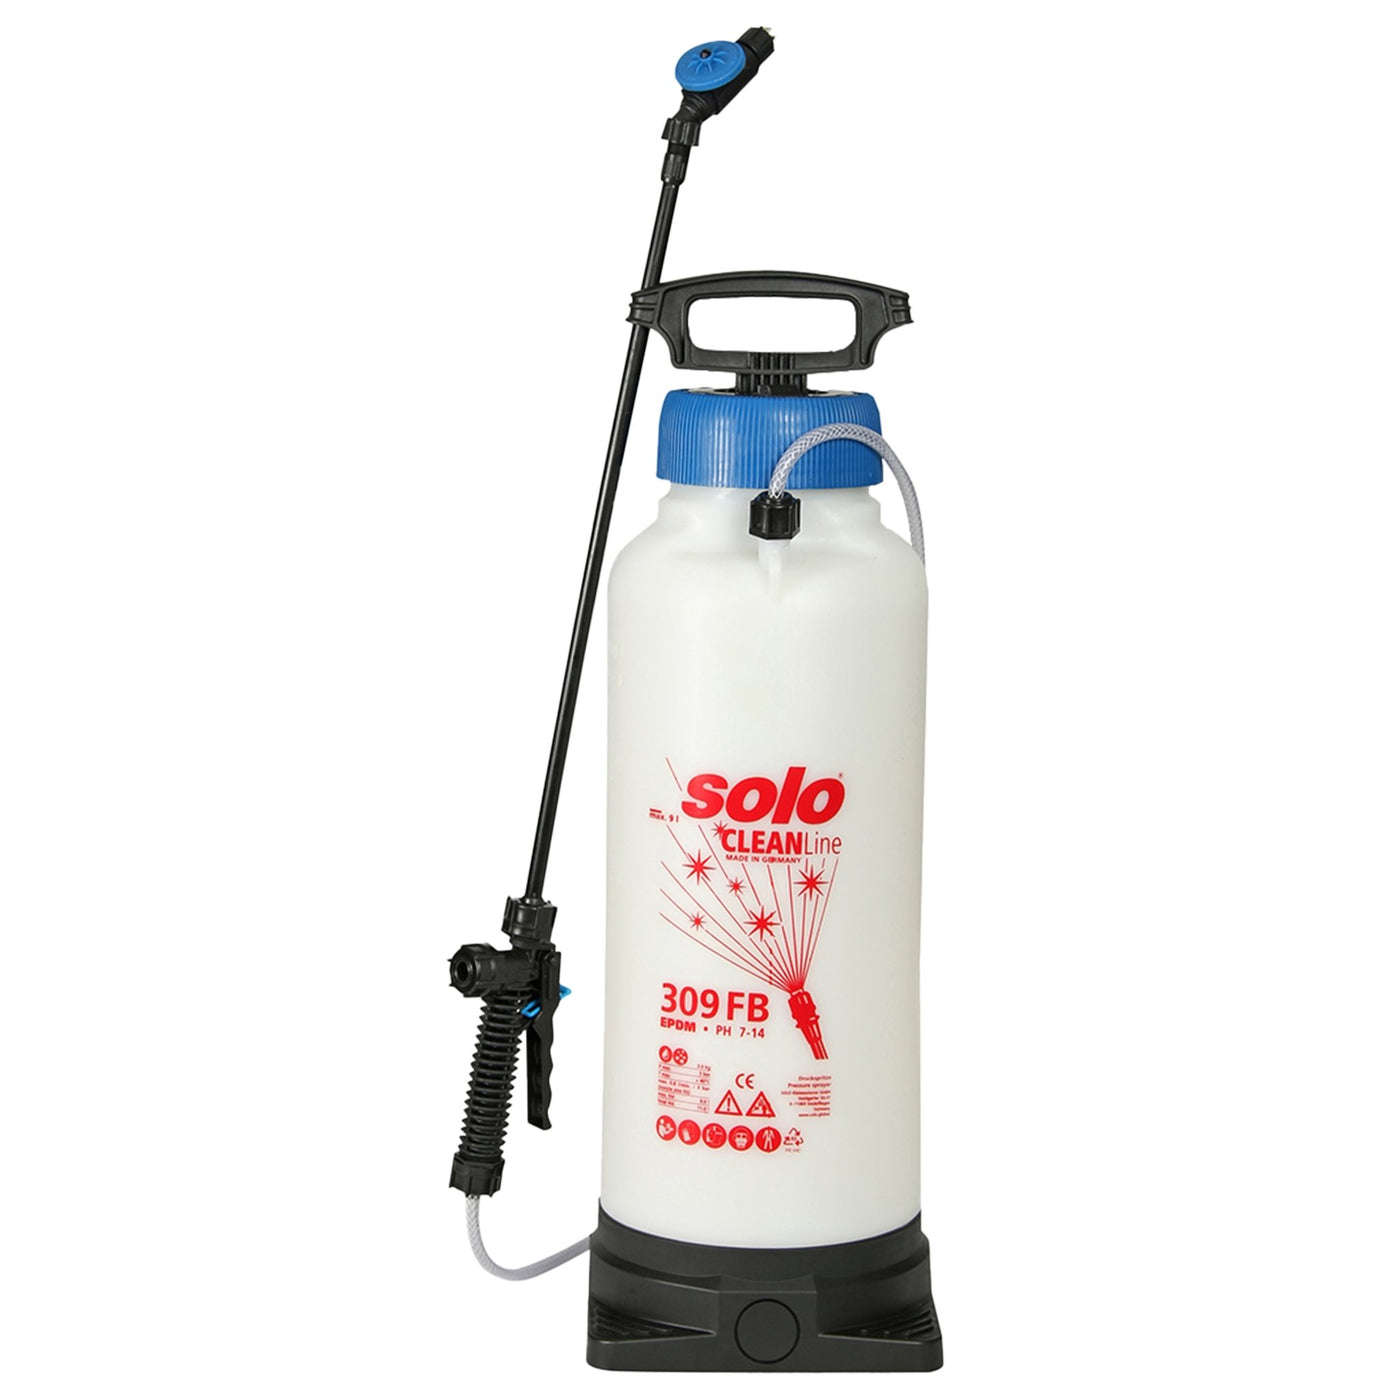 Cleanline foaming sprayer 9L EPDM seals 309FB - Solo New Zealand